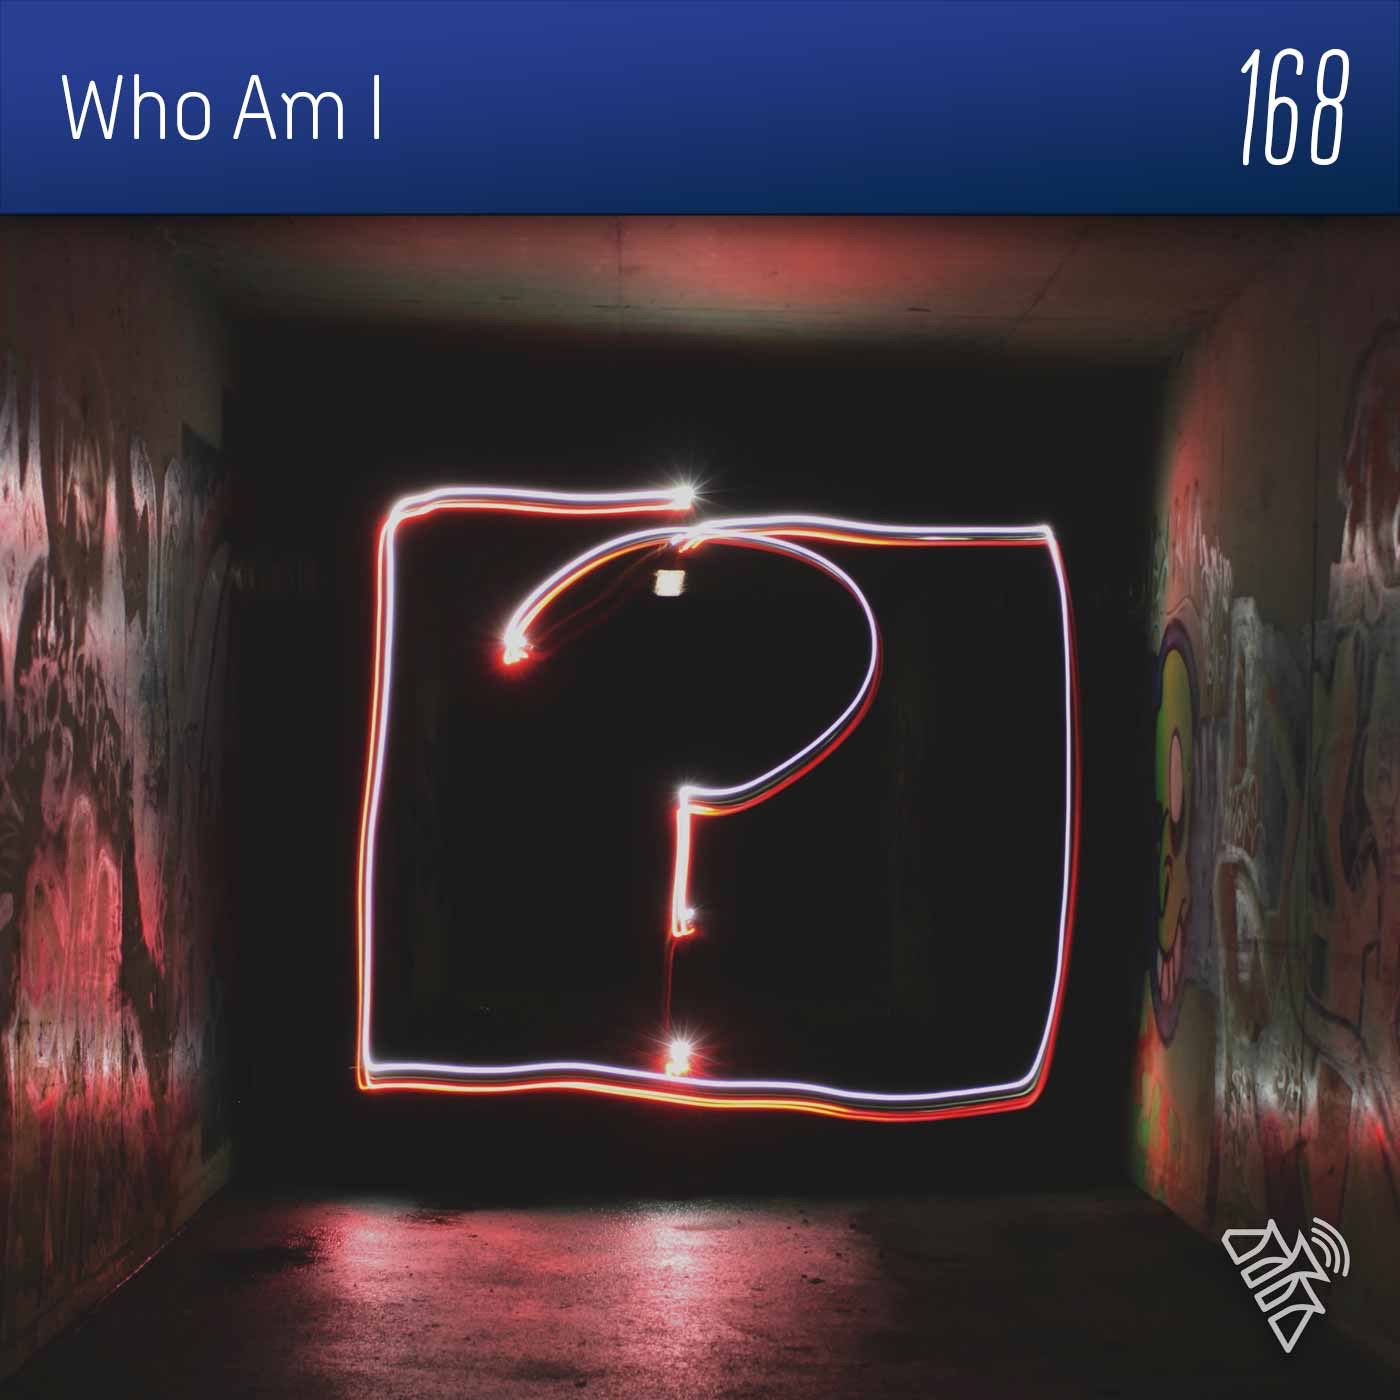 Who am I - Pr Deane Clee - 168